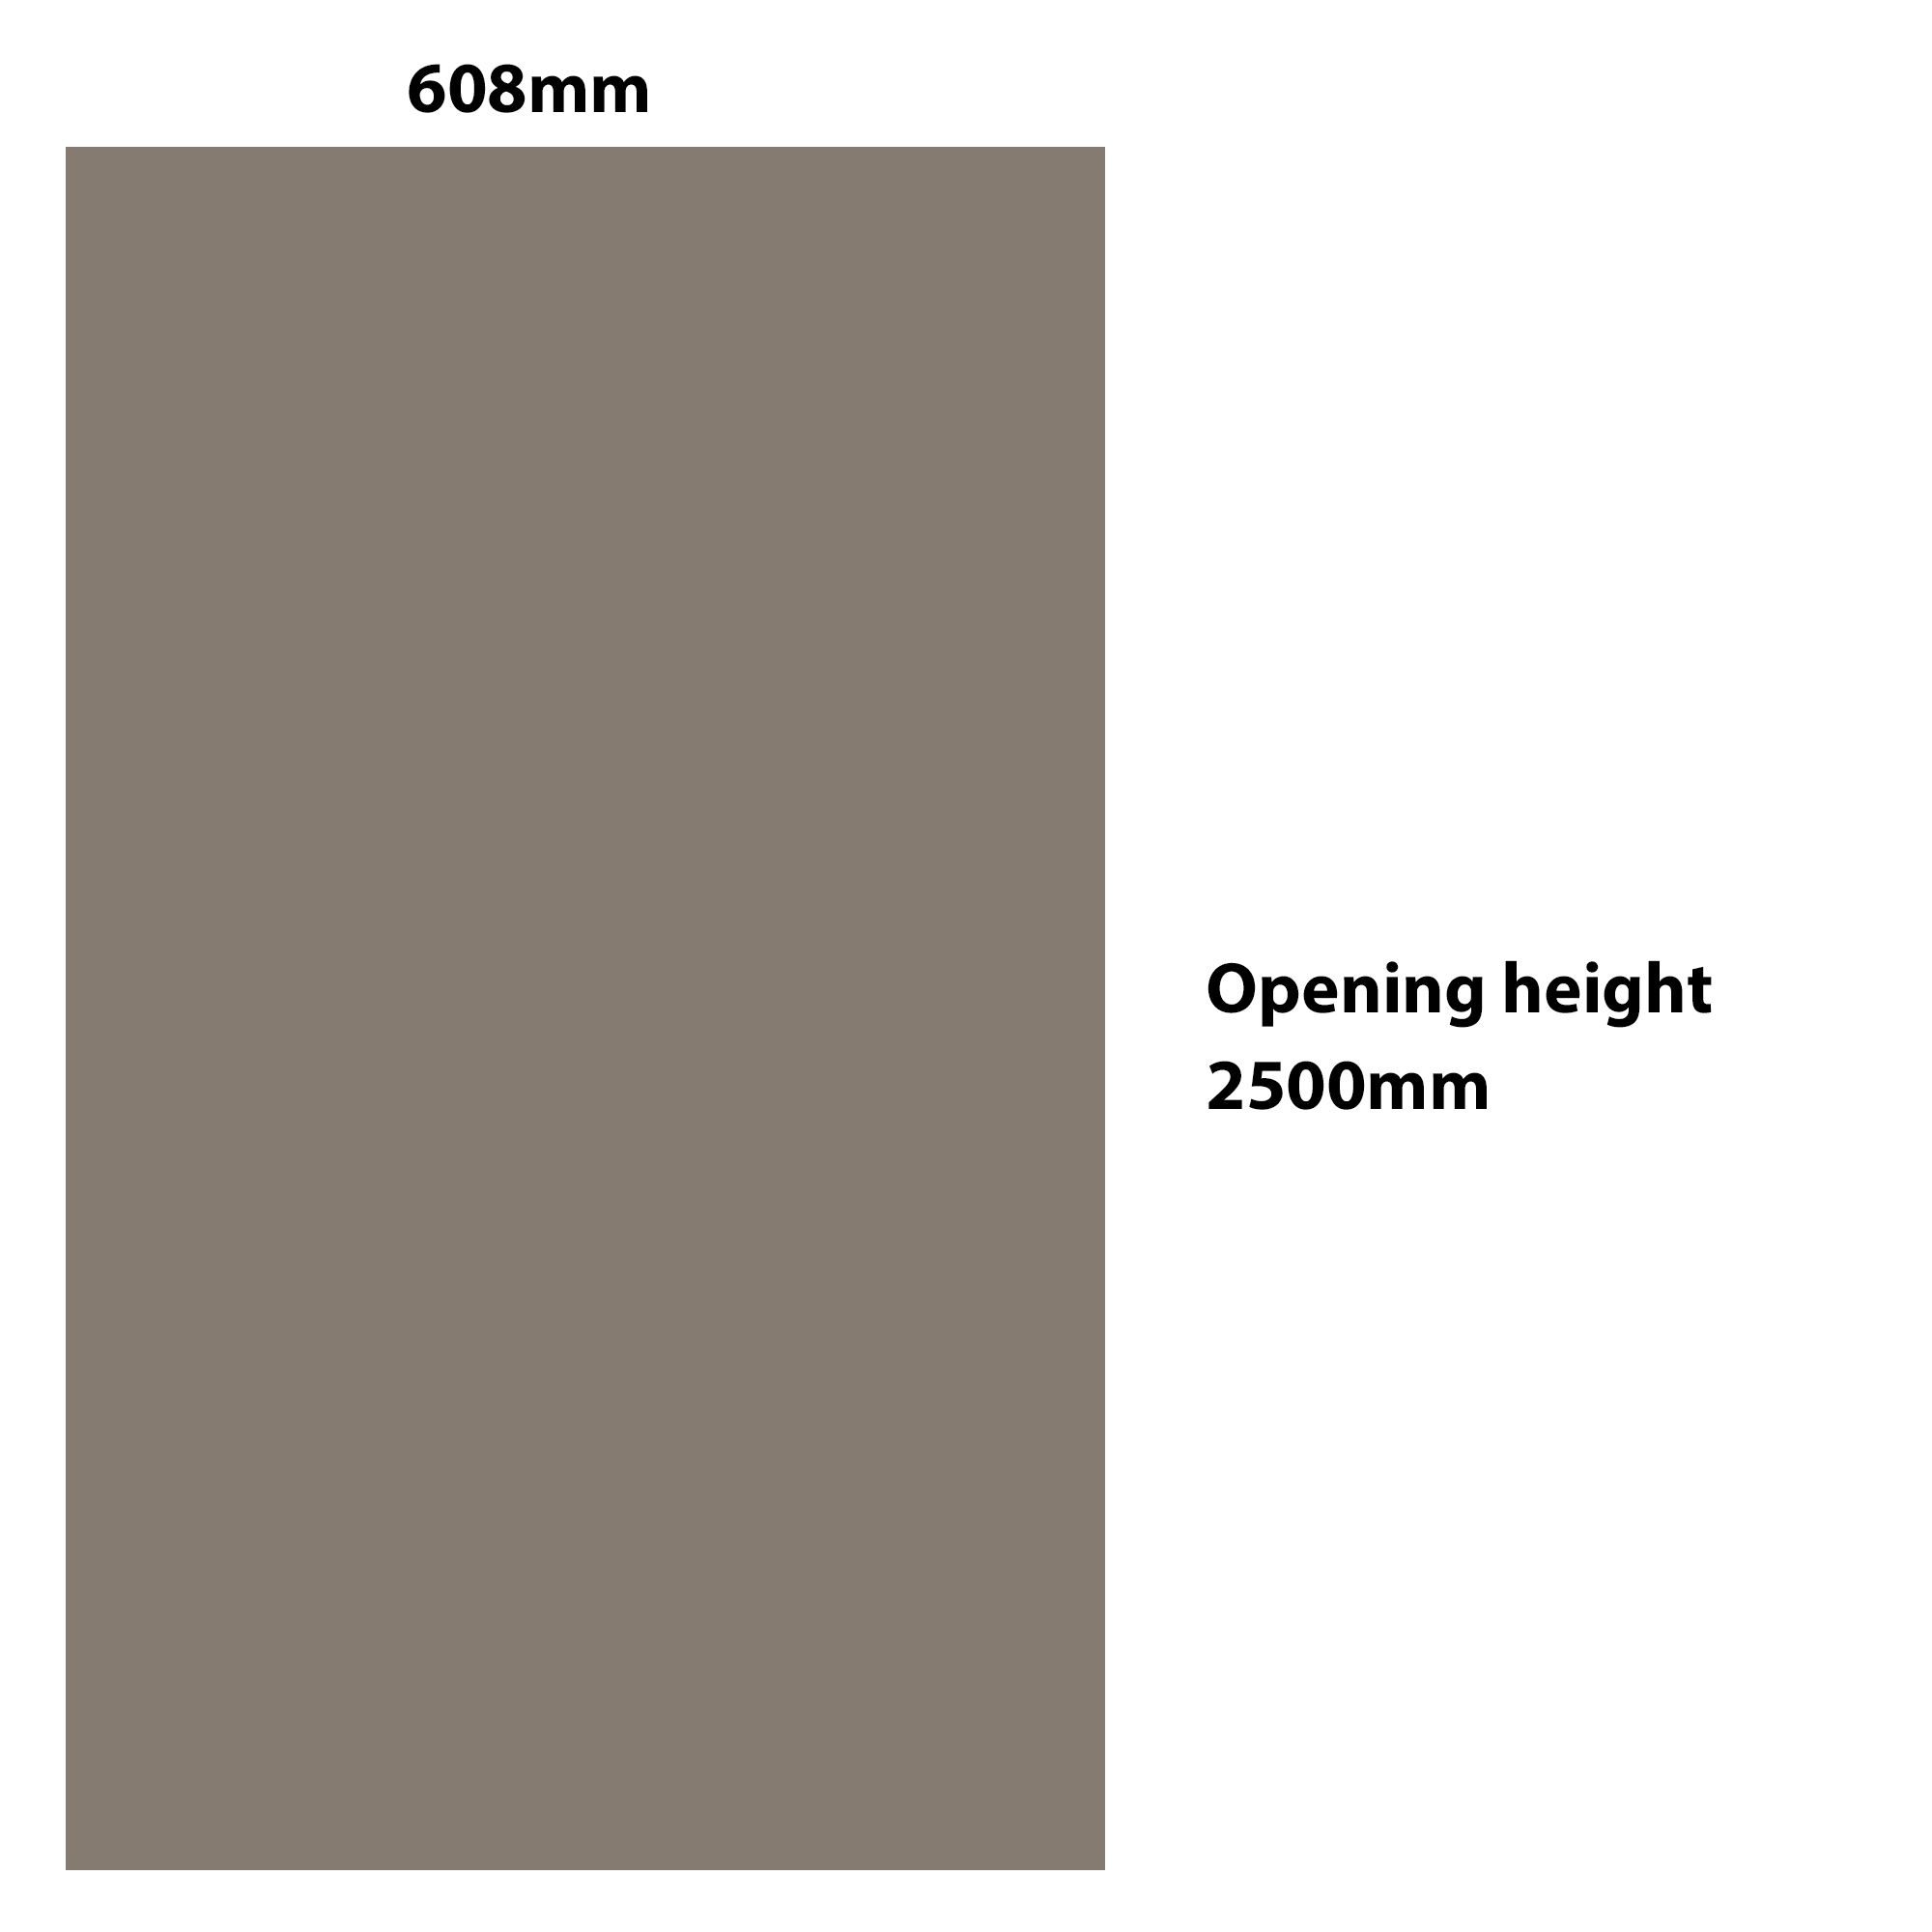 Form Valla Single panel Mirrored Sliding wardrobe door (H) 2500mm x (W) 922mm